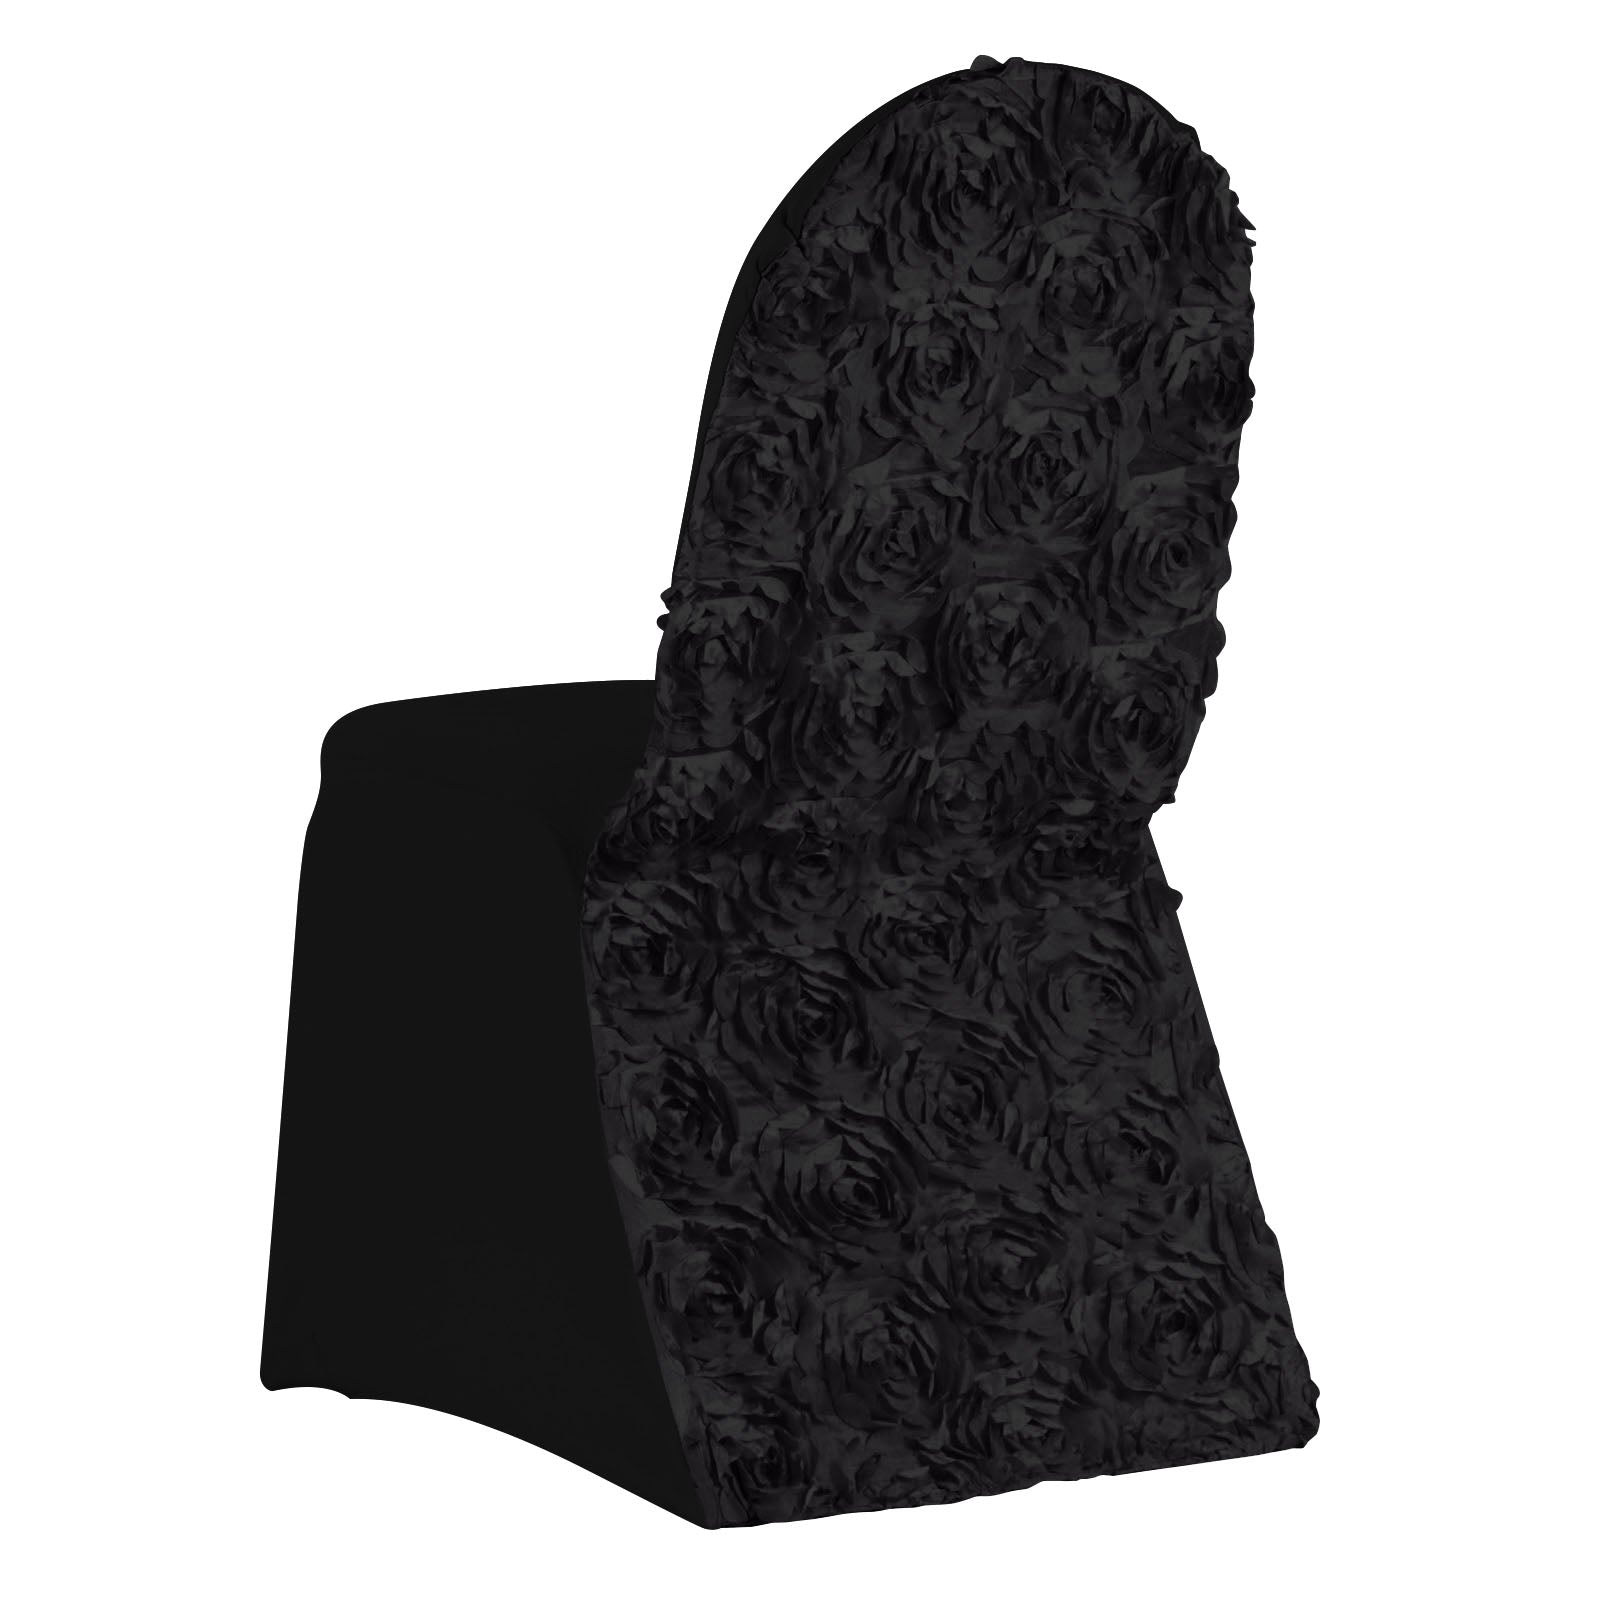 Black Satin Rosette Stretch Banquet Spandex Chair Cover